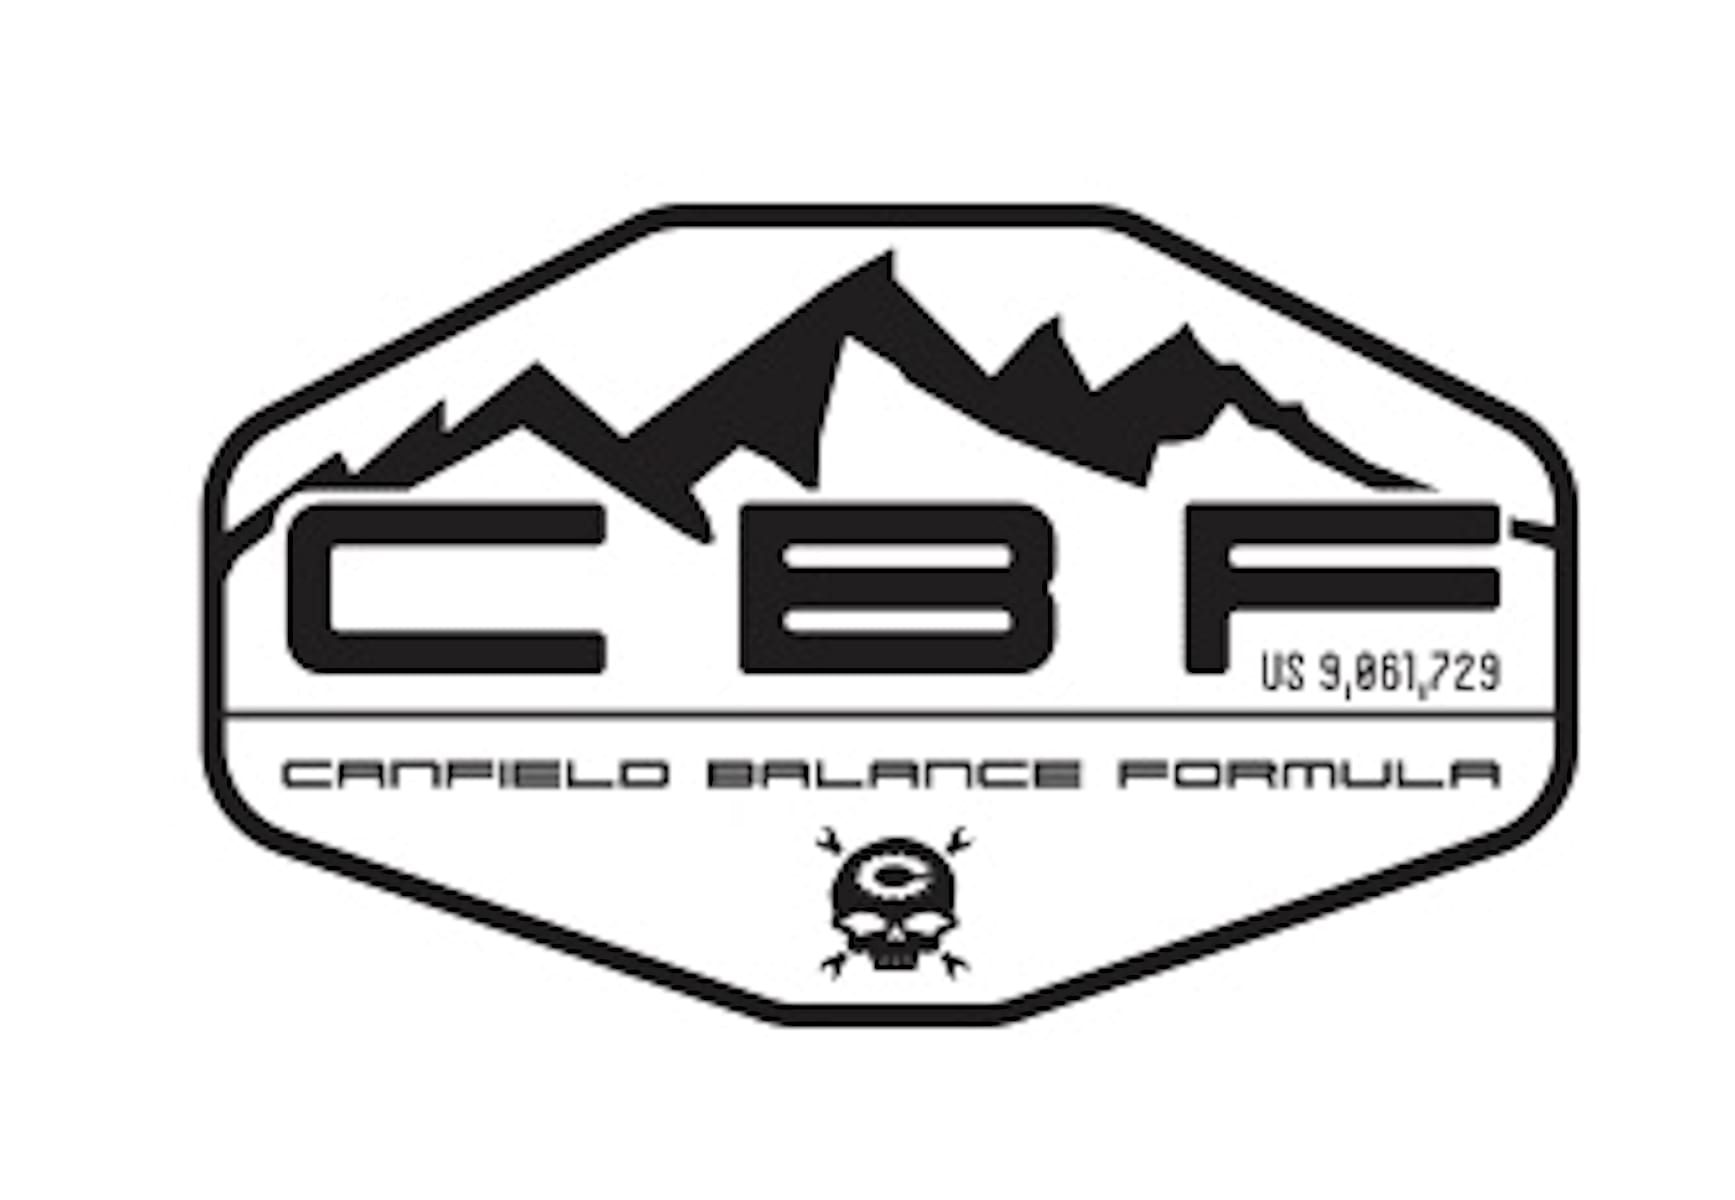 Canfield Balance Formula